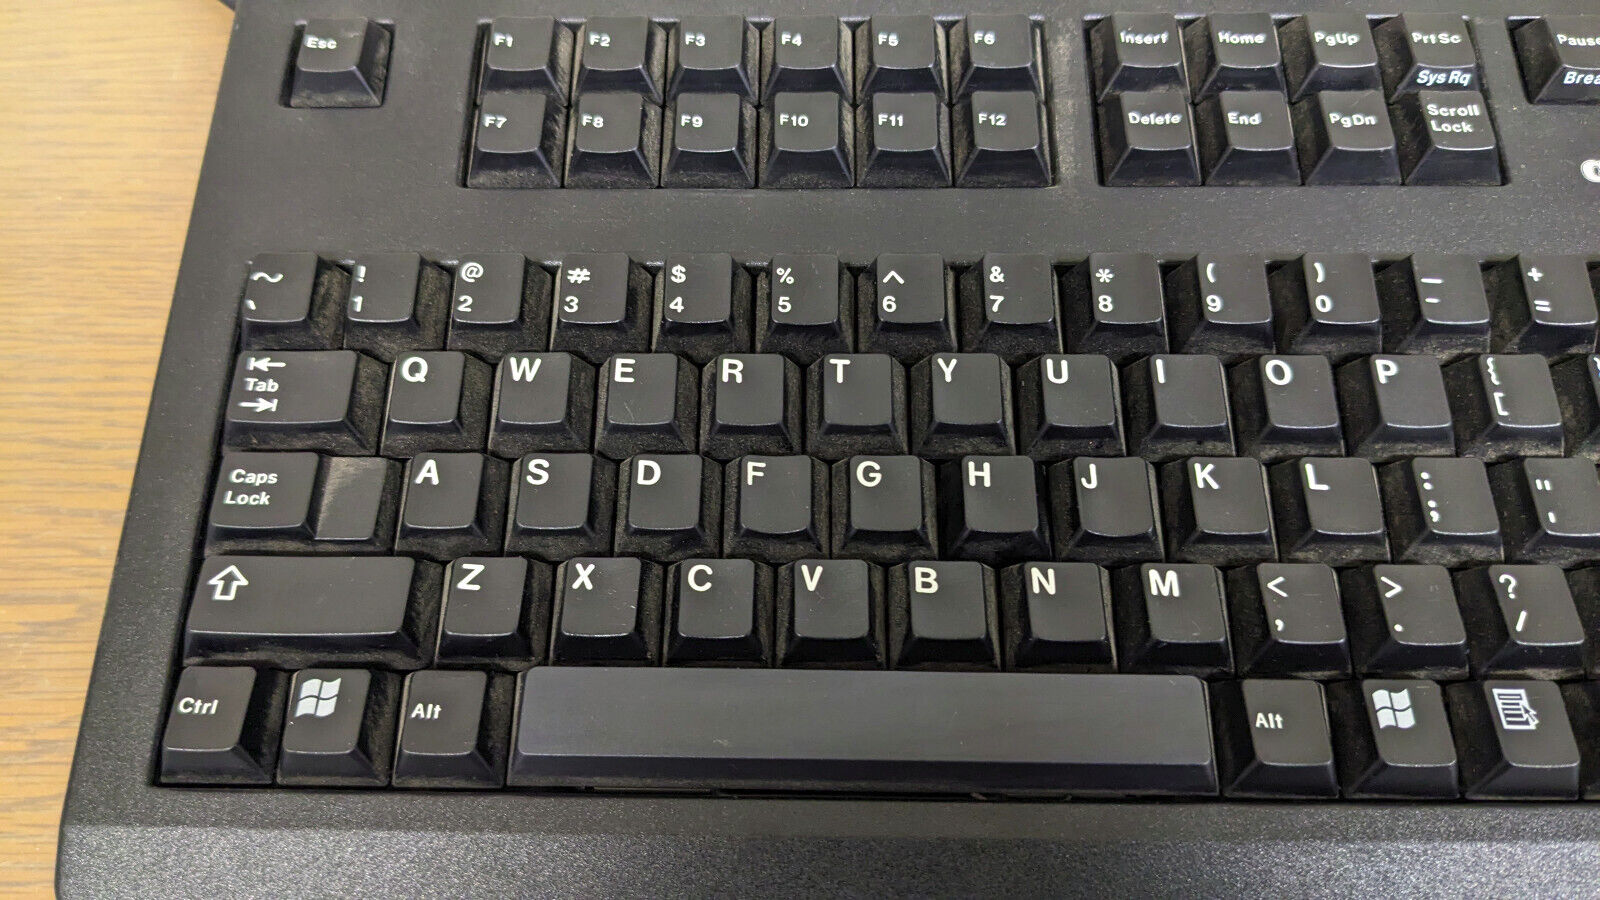 Cherry Mechanical keyboard Touchboard G80-11900HRMUS / MX11900 TESTED WORKS